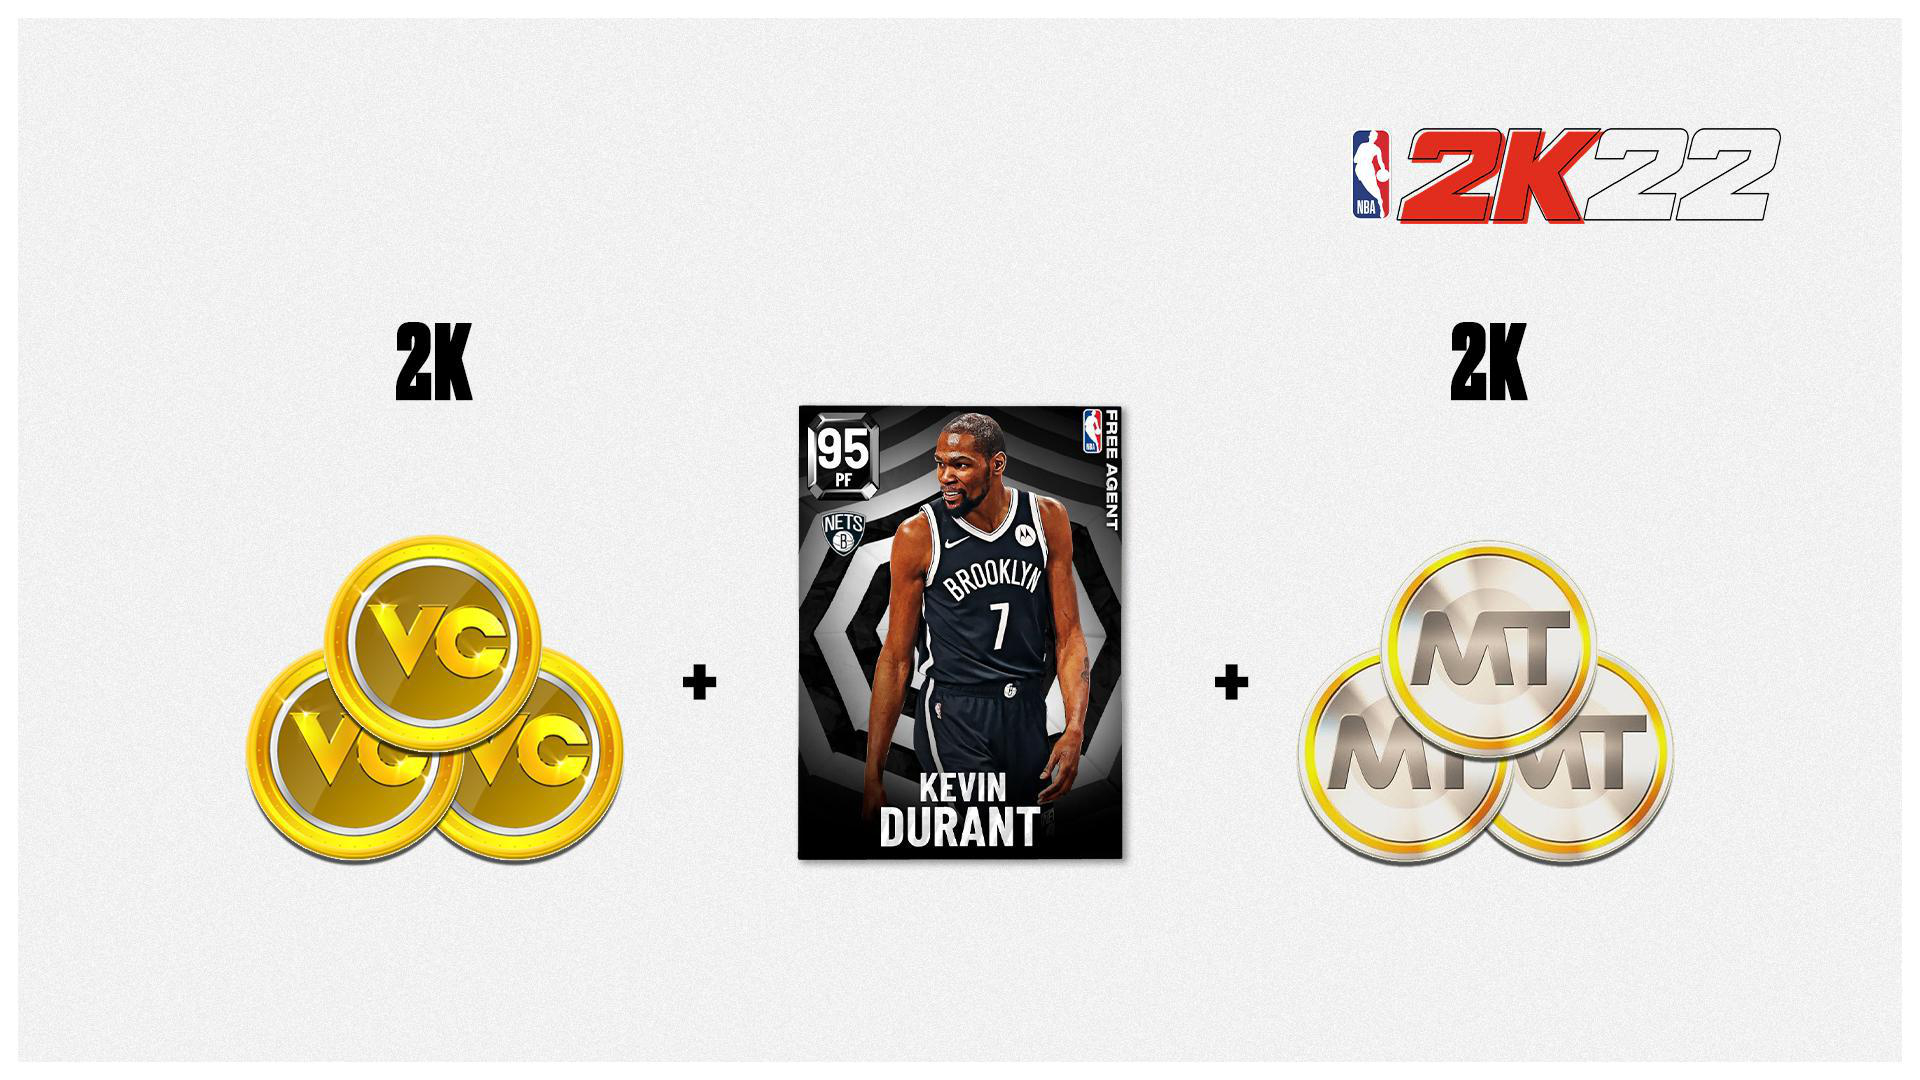 NBA 2K22 - [Xbox Series X